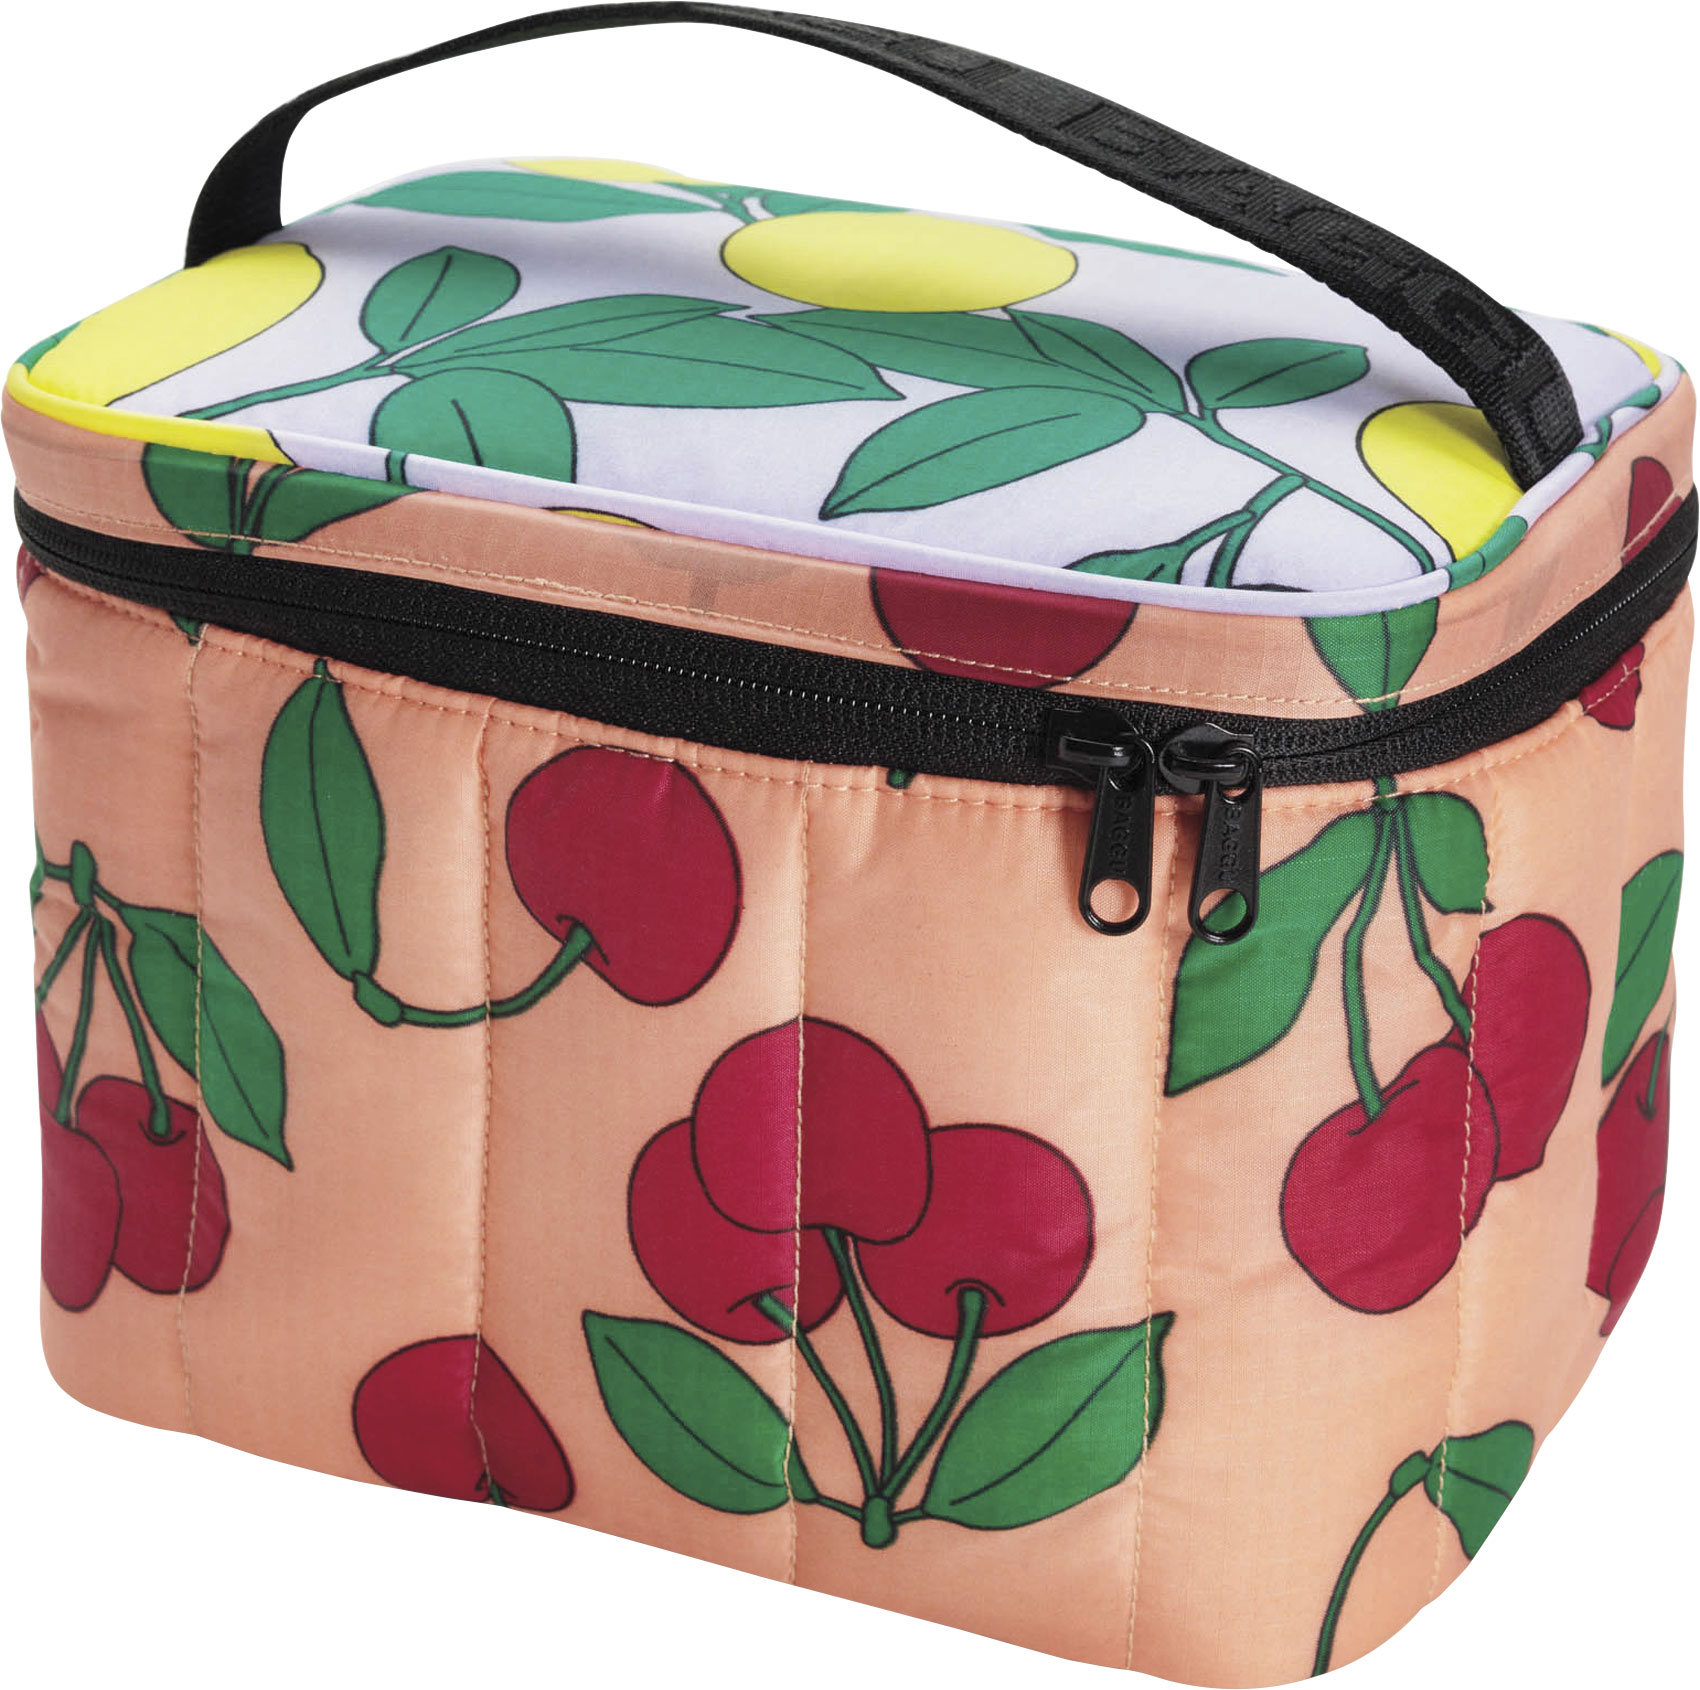 puffy Baggu picnic cooler bag with cherry print